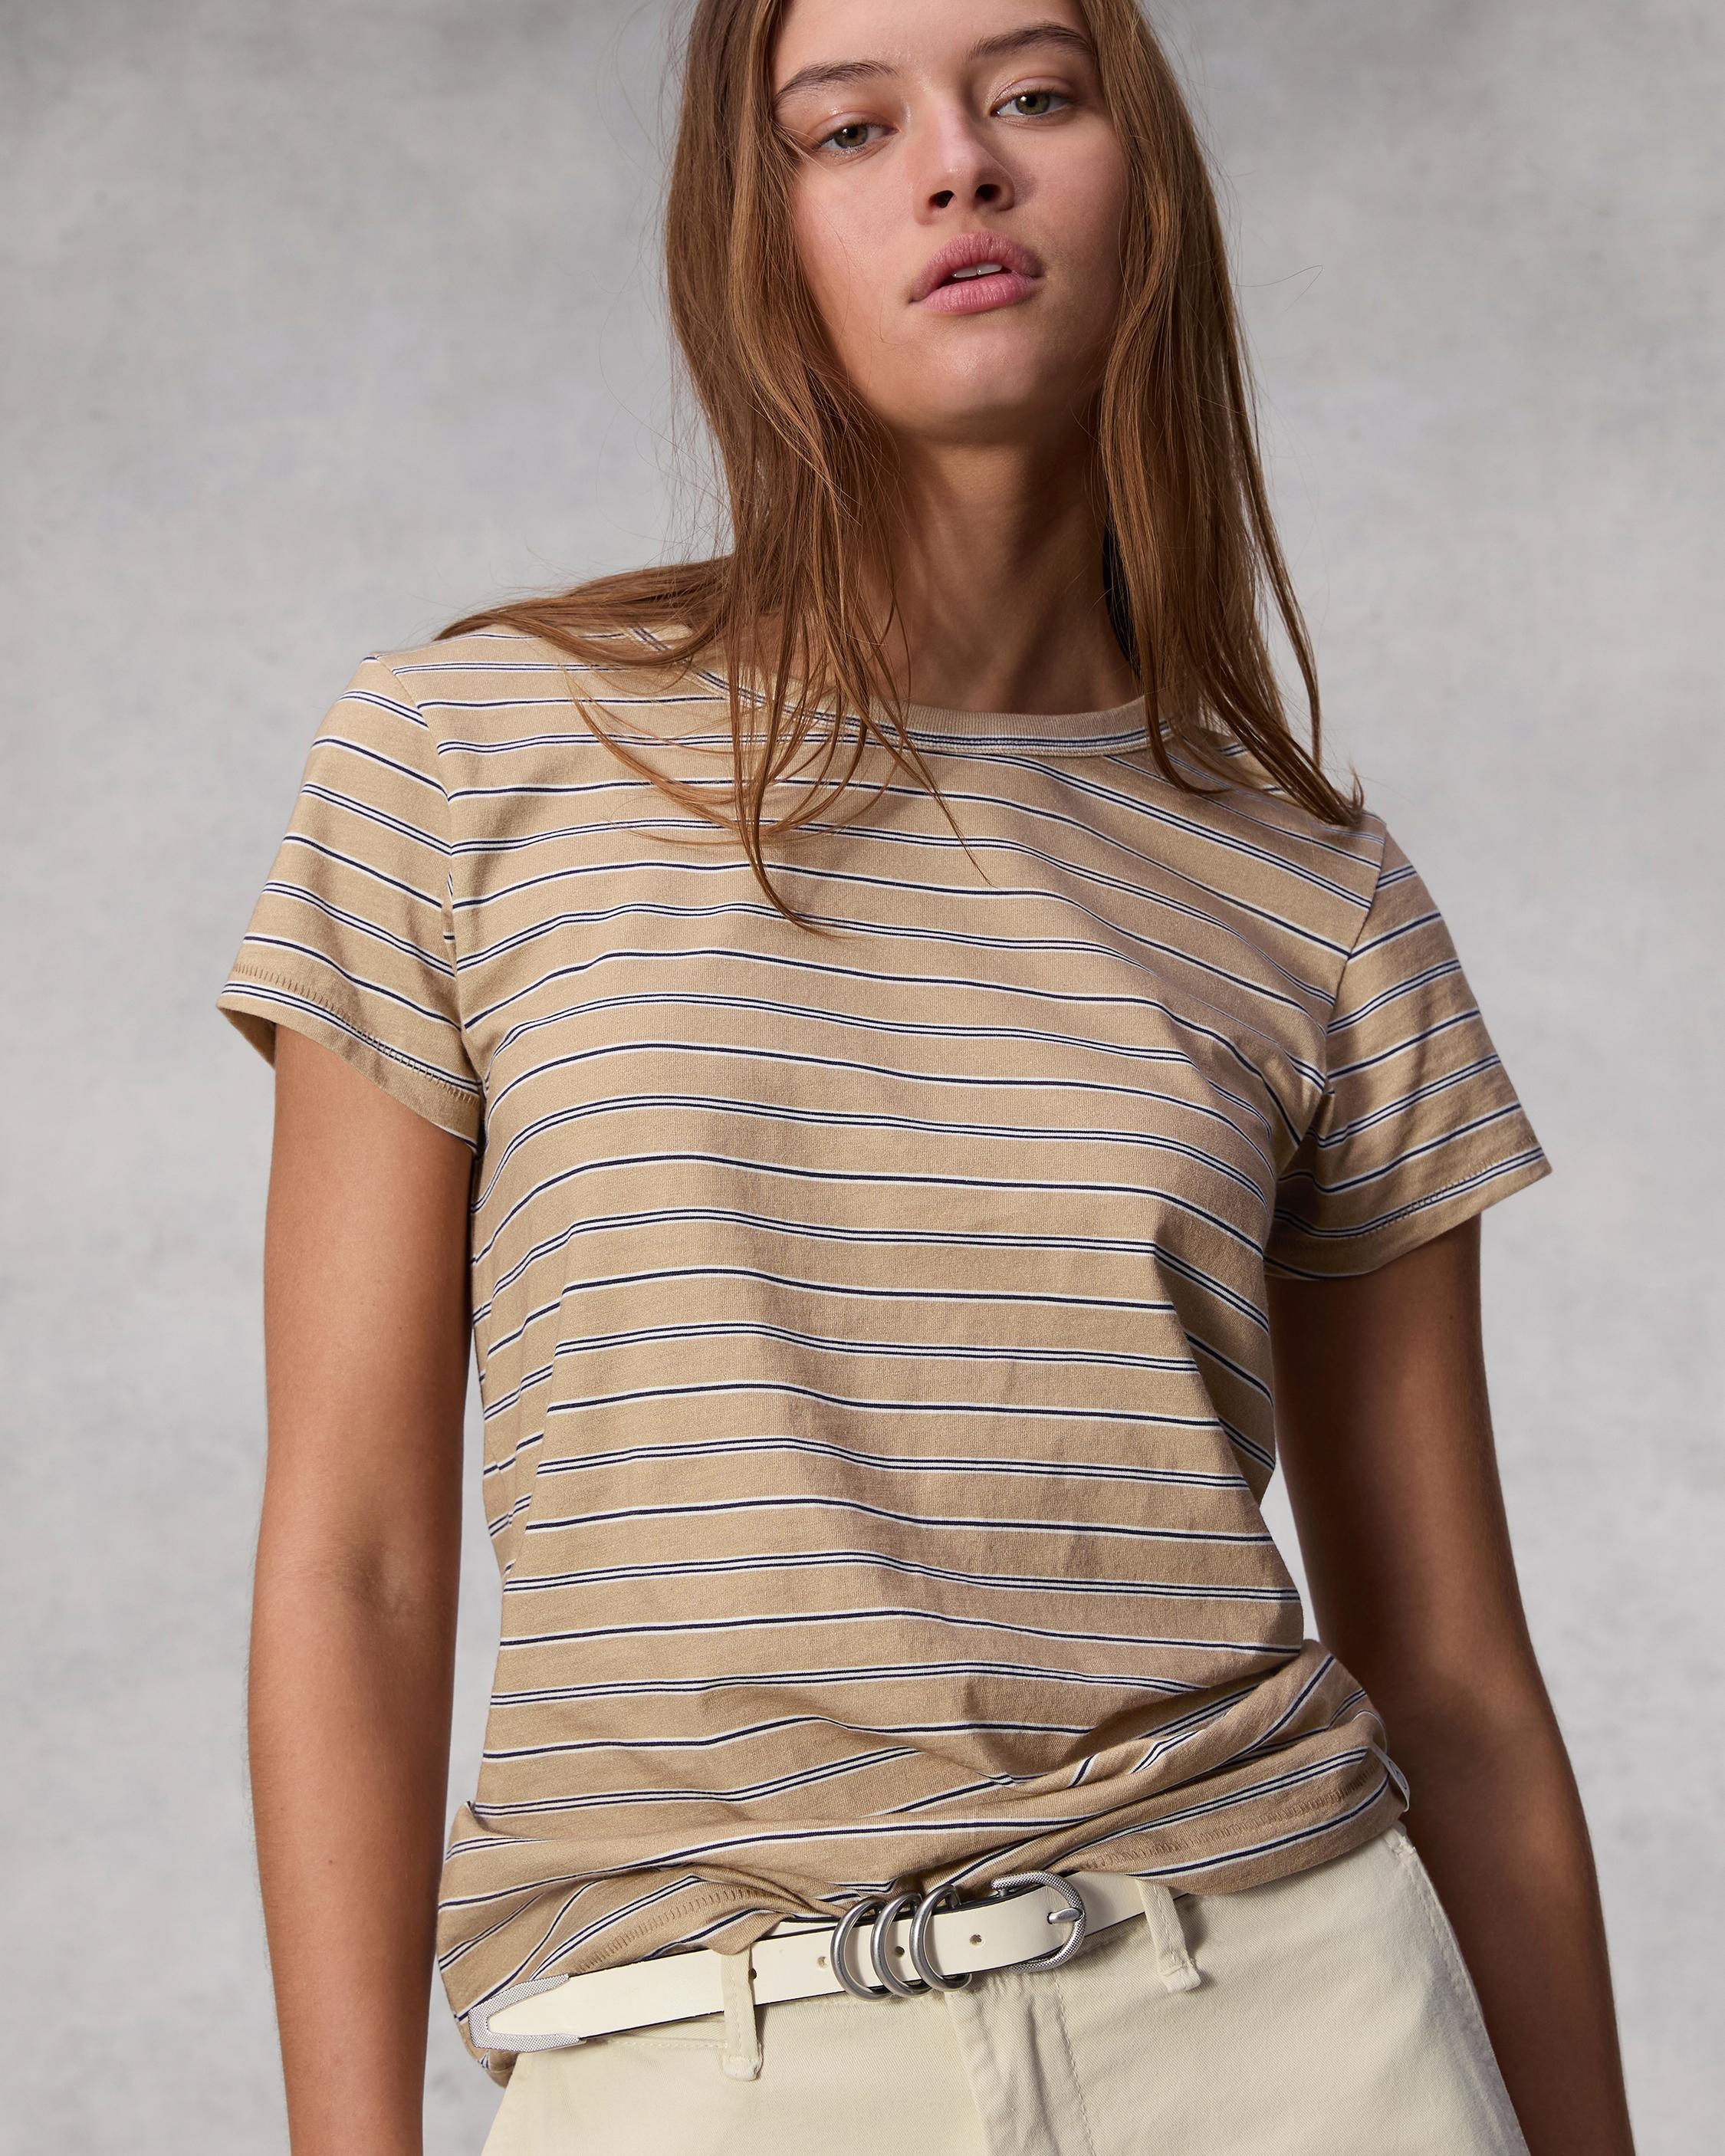 The Slub Stripe Tee
Cotton T-Shirt - 6